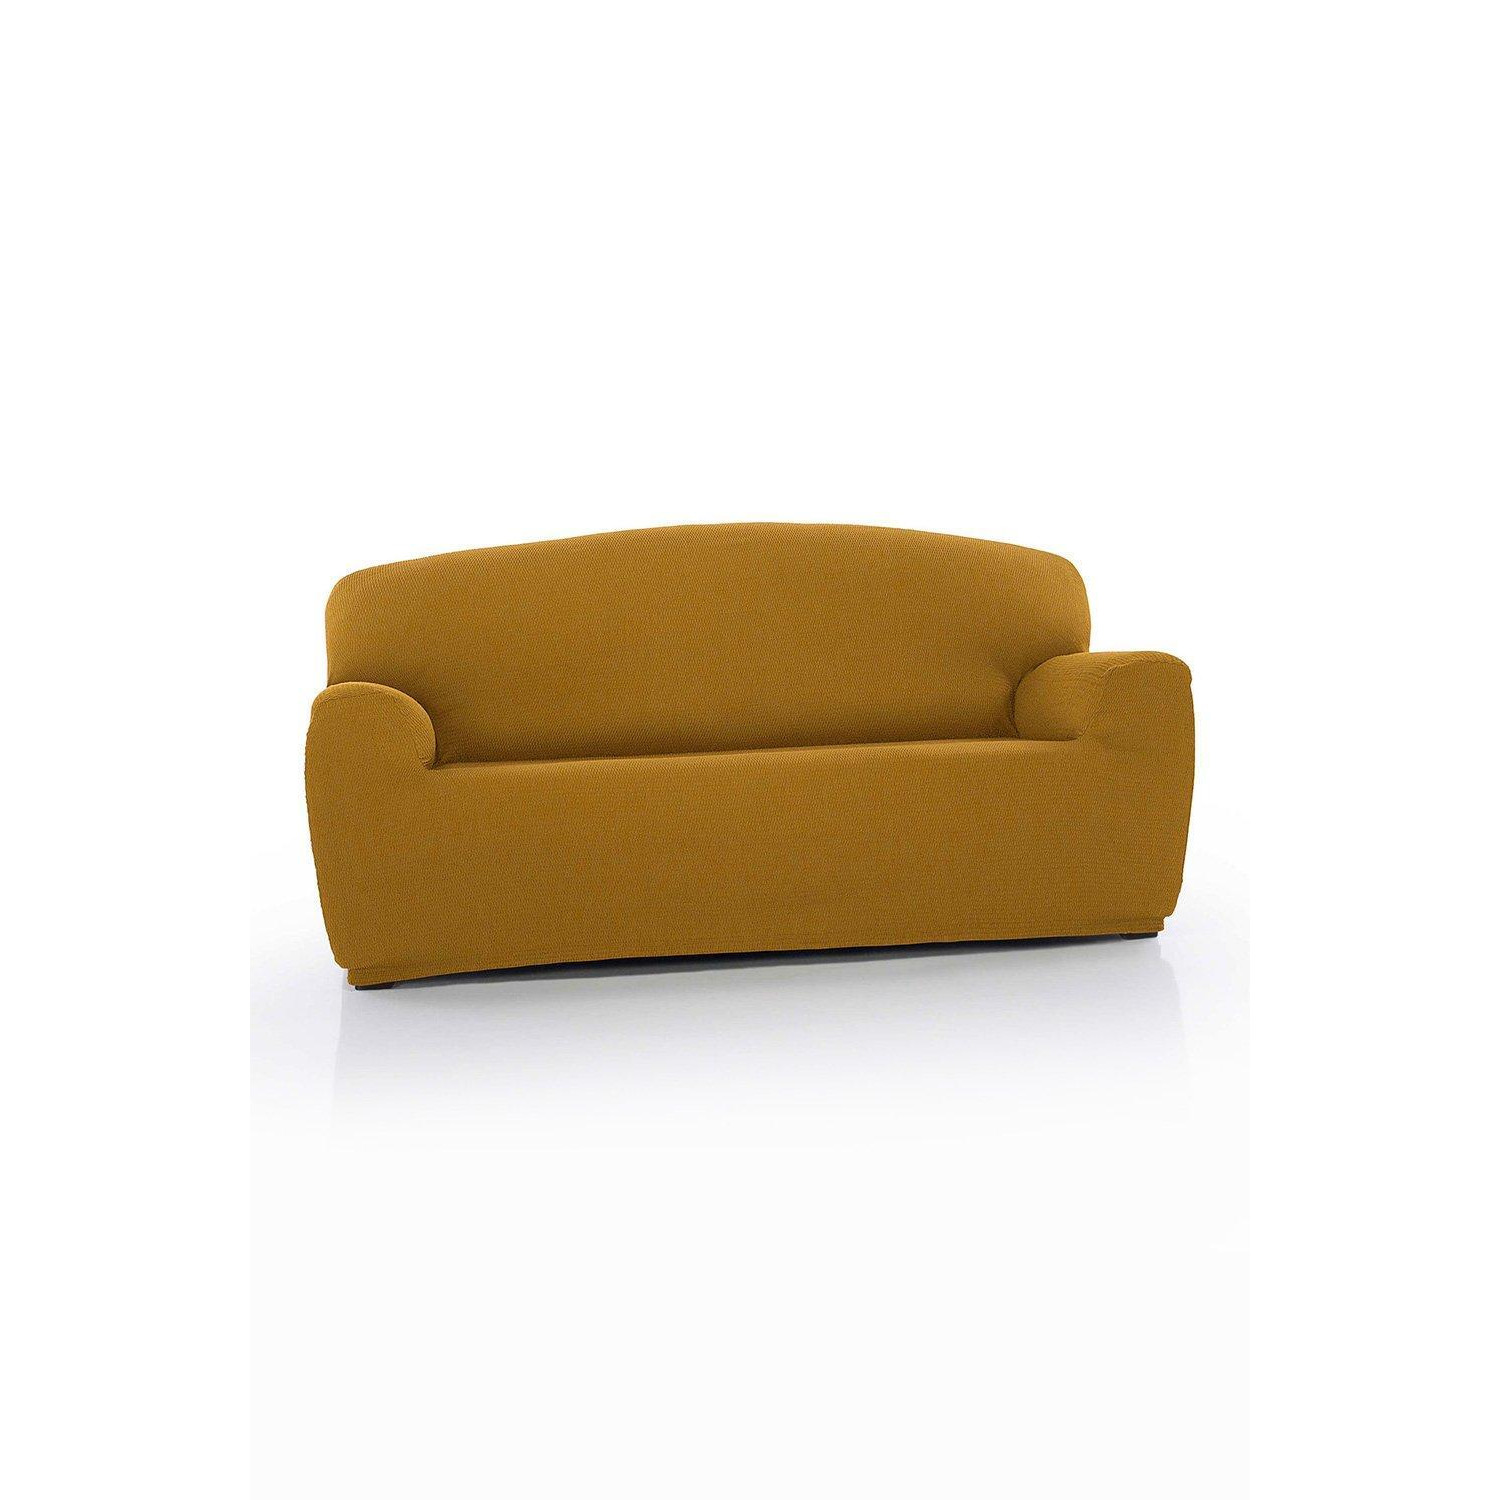 Three Seater 'Iris' Sofa Cover Elasticated Slipcover Protector - image 1